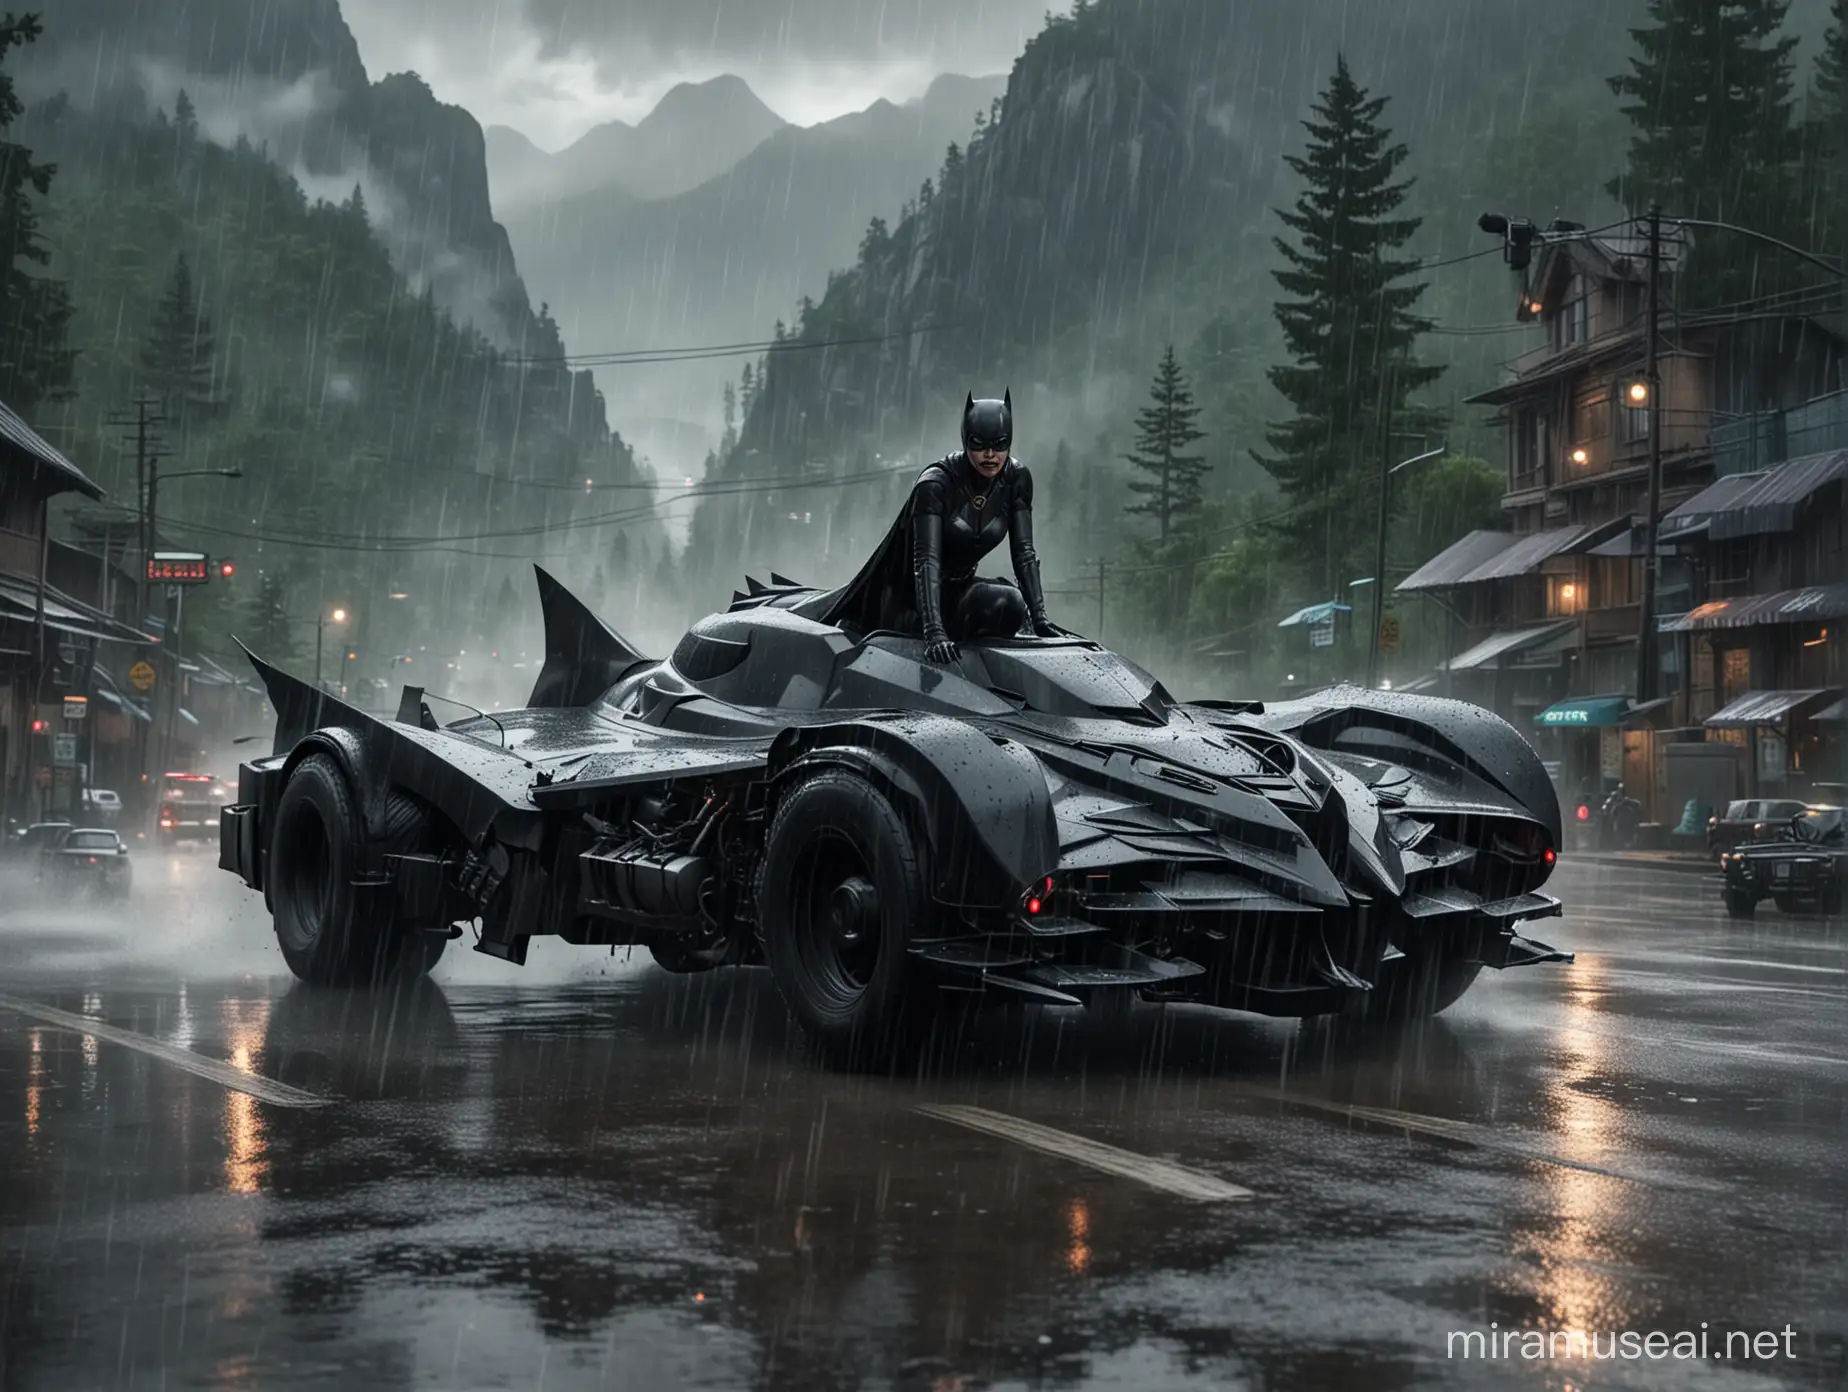 Catwoman Rides Batmobile Through Rainy Mountain Terrain